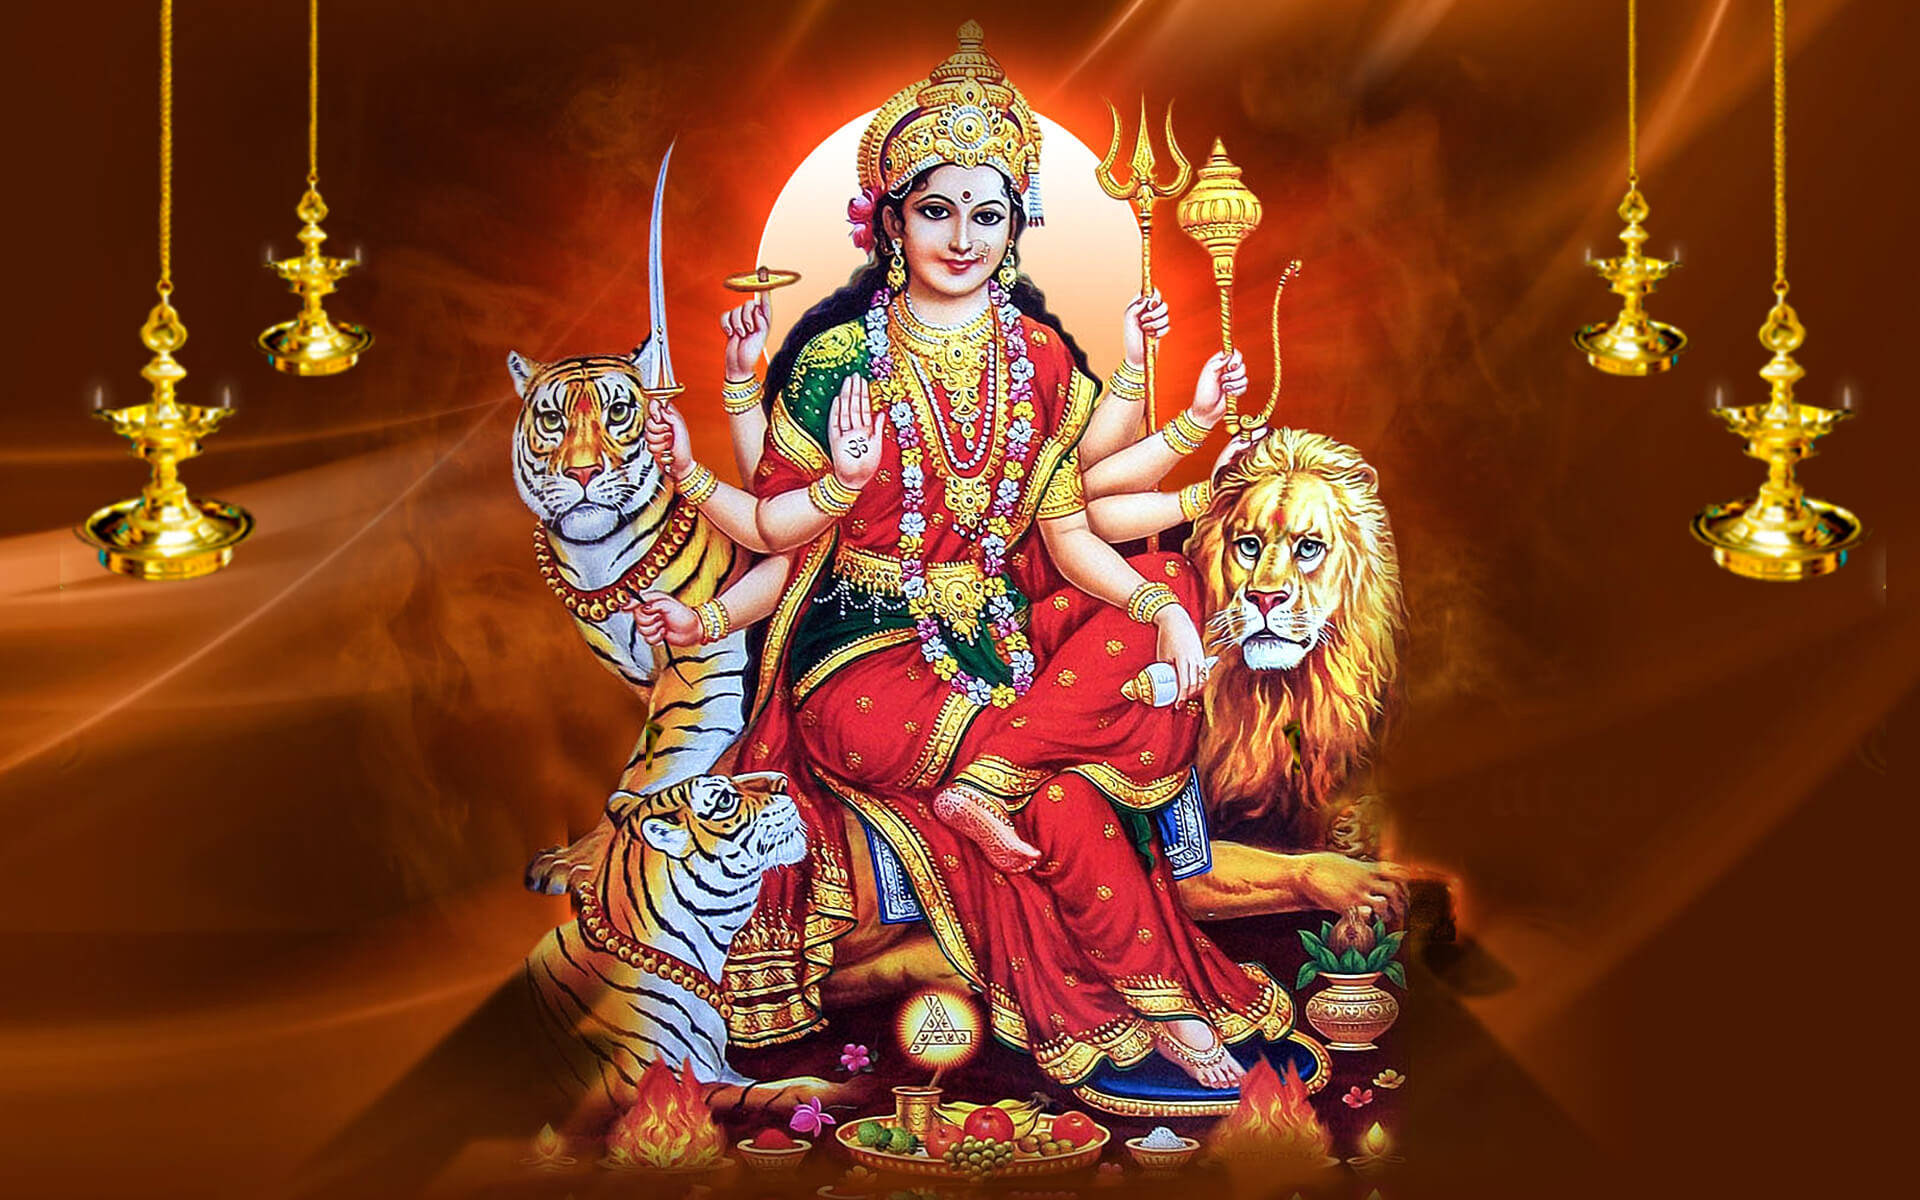 Free Maa Durga Wallpaper Downloads, [100+] Maa Durga Wallpapers for FREE |  